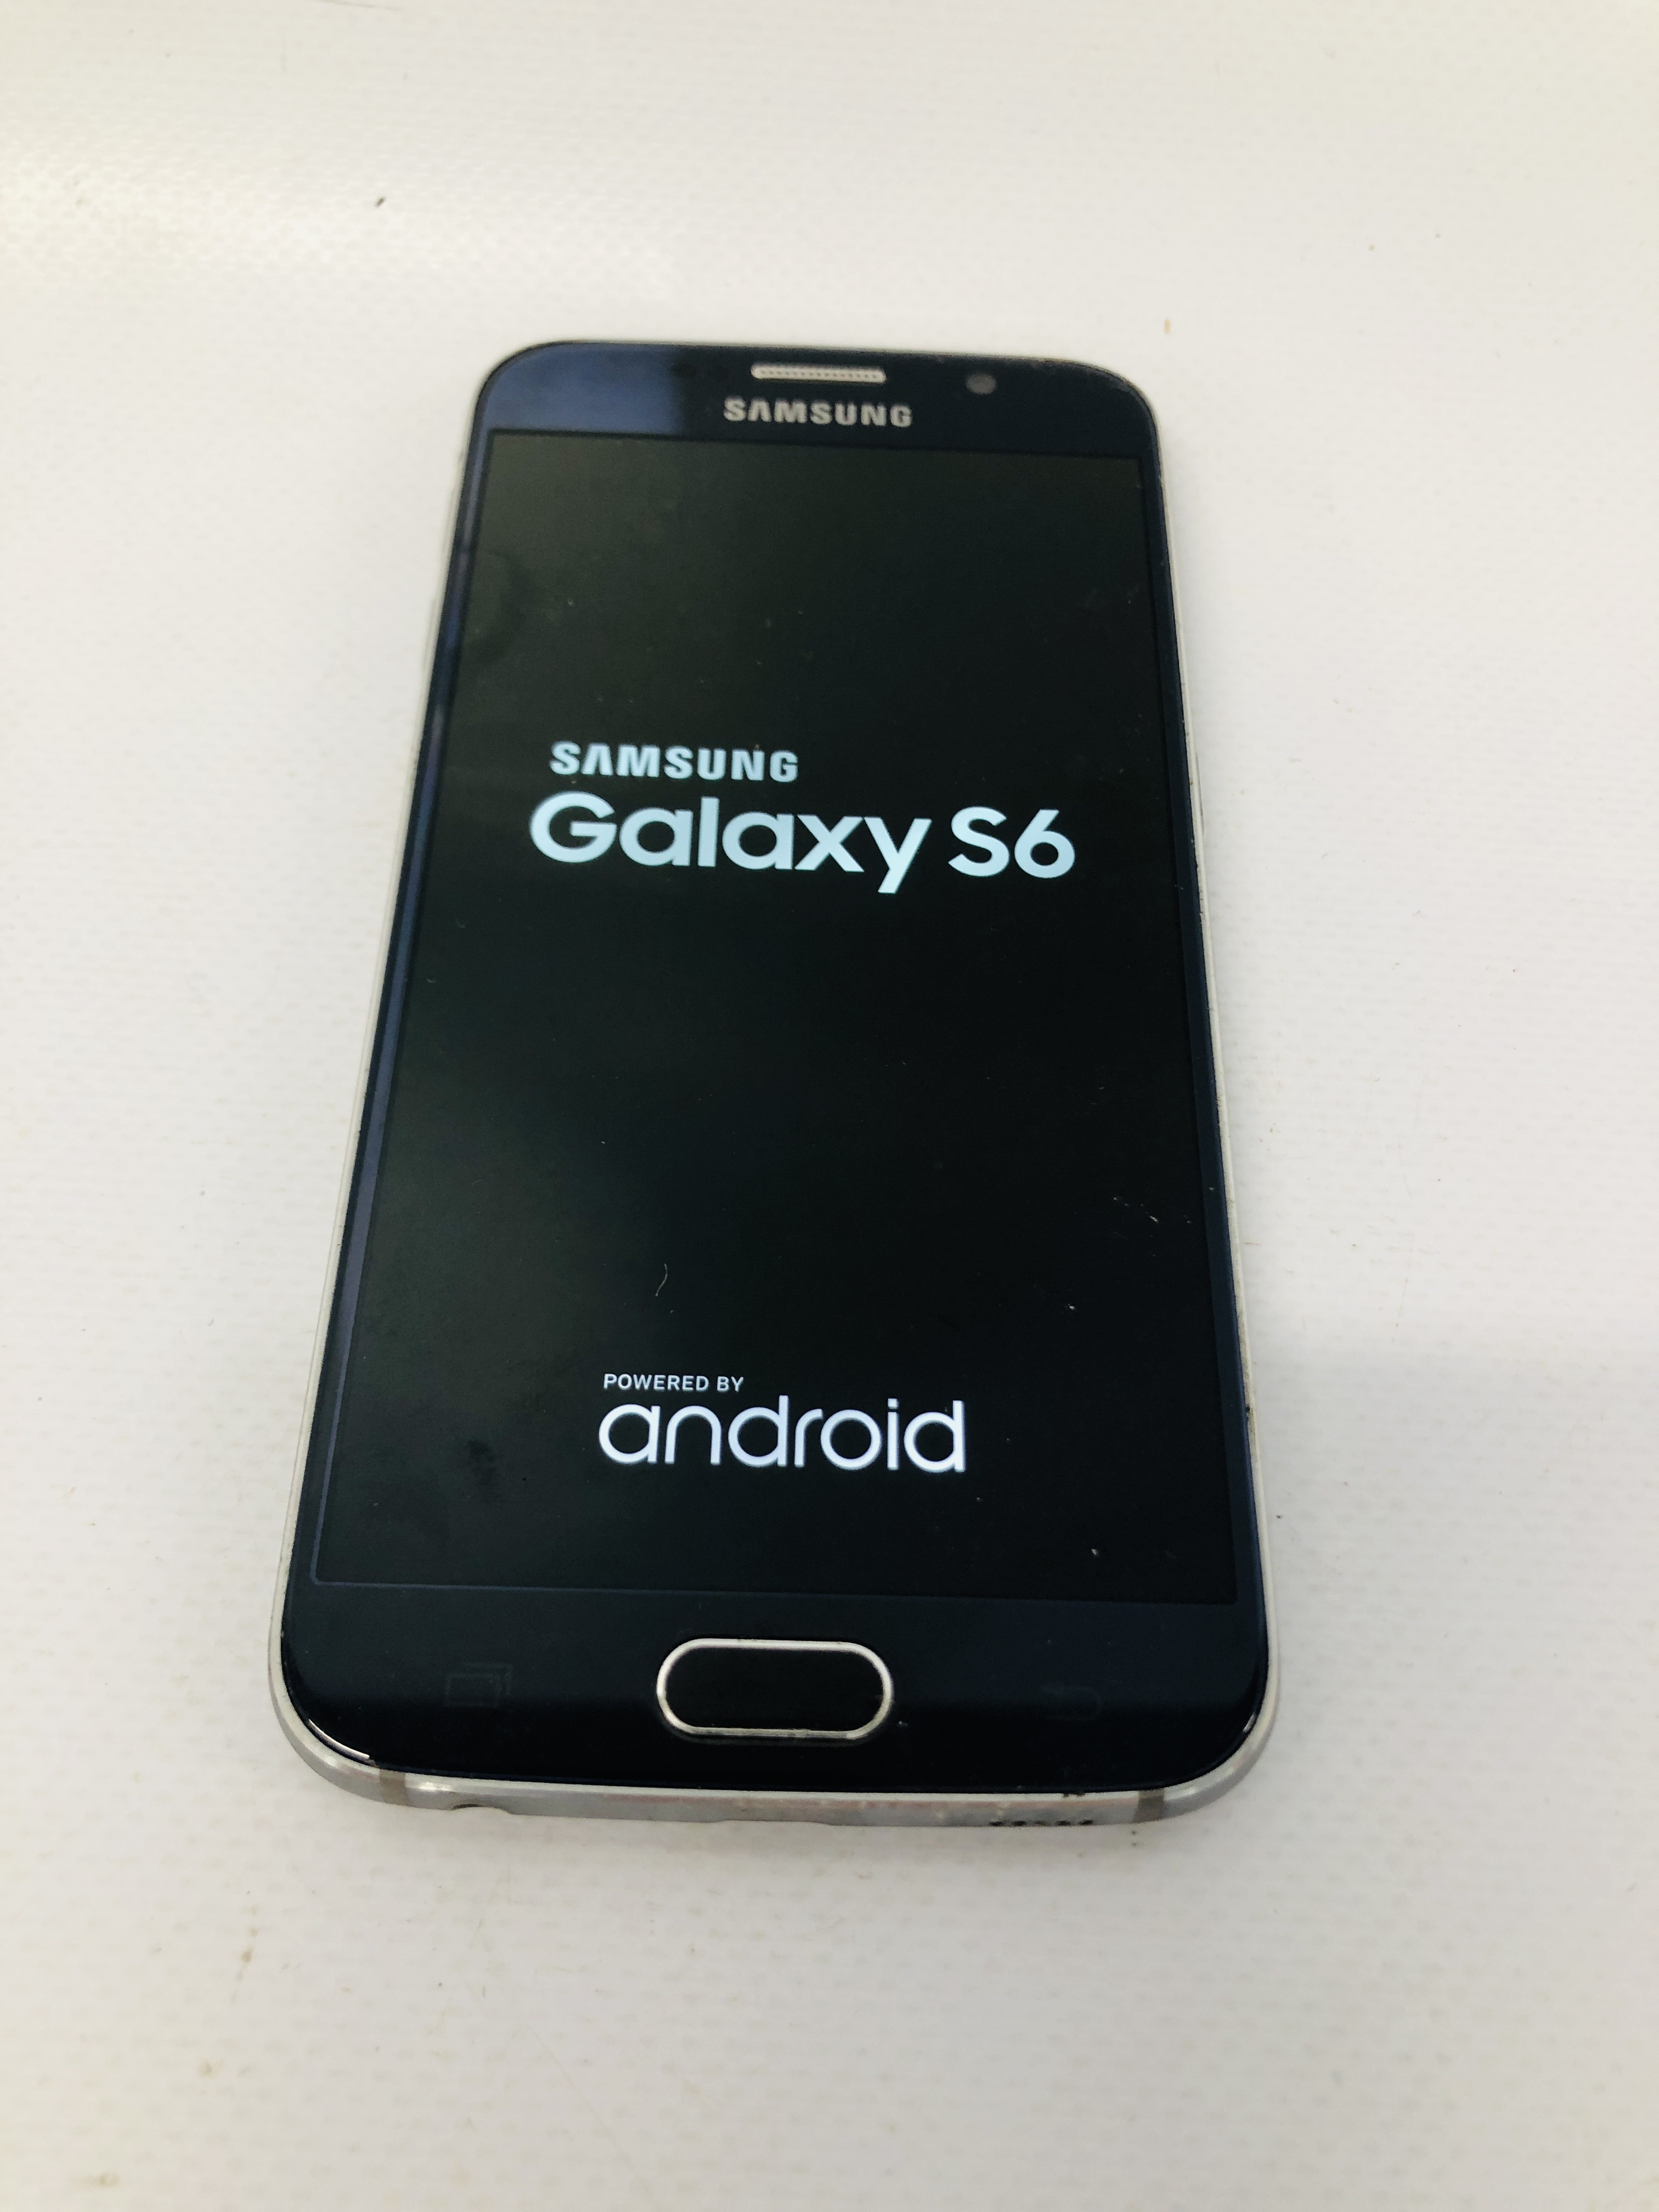 A SAMSUNG GALAXY S6 SMARTPHONE - SOLD AS SEEN - NO GUARANTEE OF CONNECTIVITY